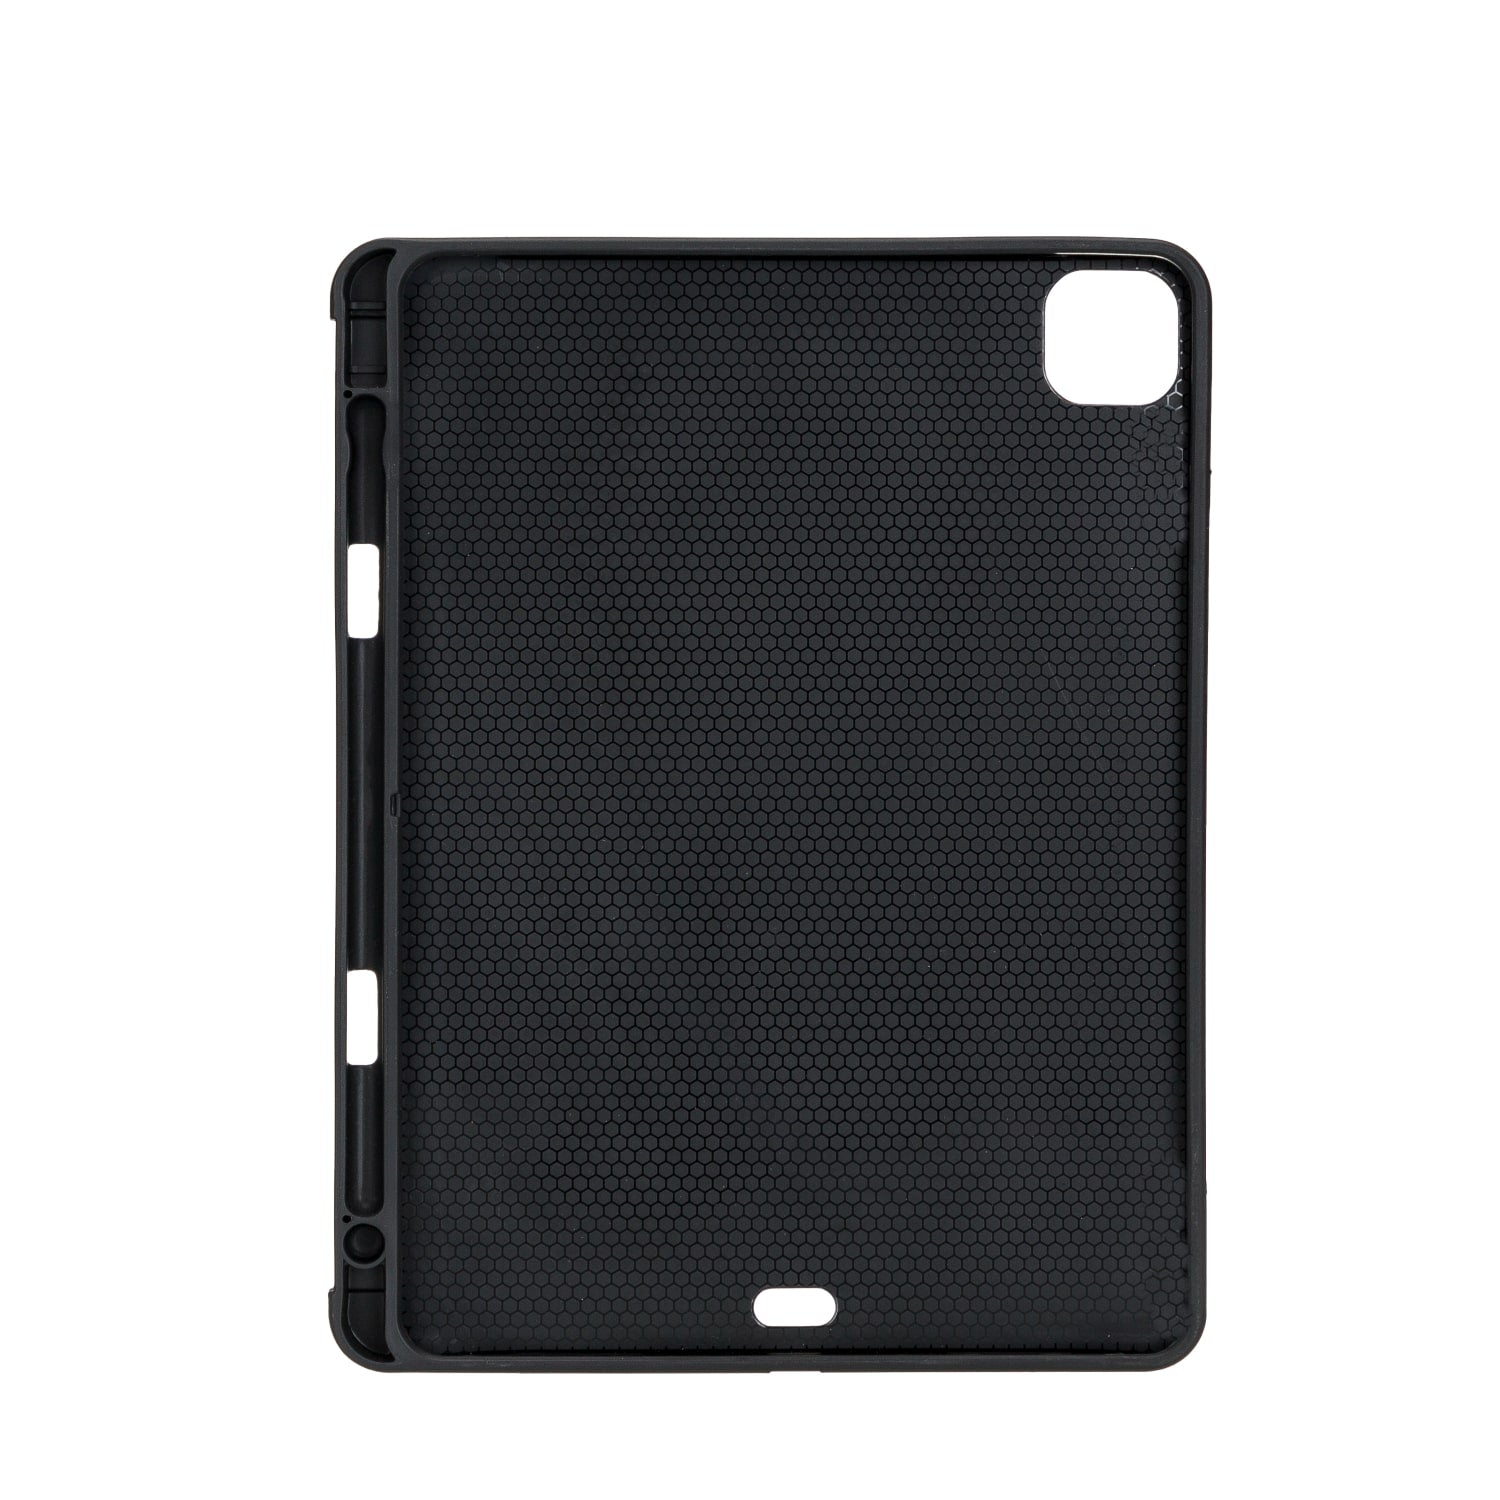 Black Leather iPad Pro 11 Inc Smart Folio Case with Apple Pen Holder - Bomonti - 6